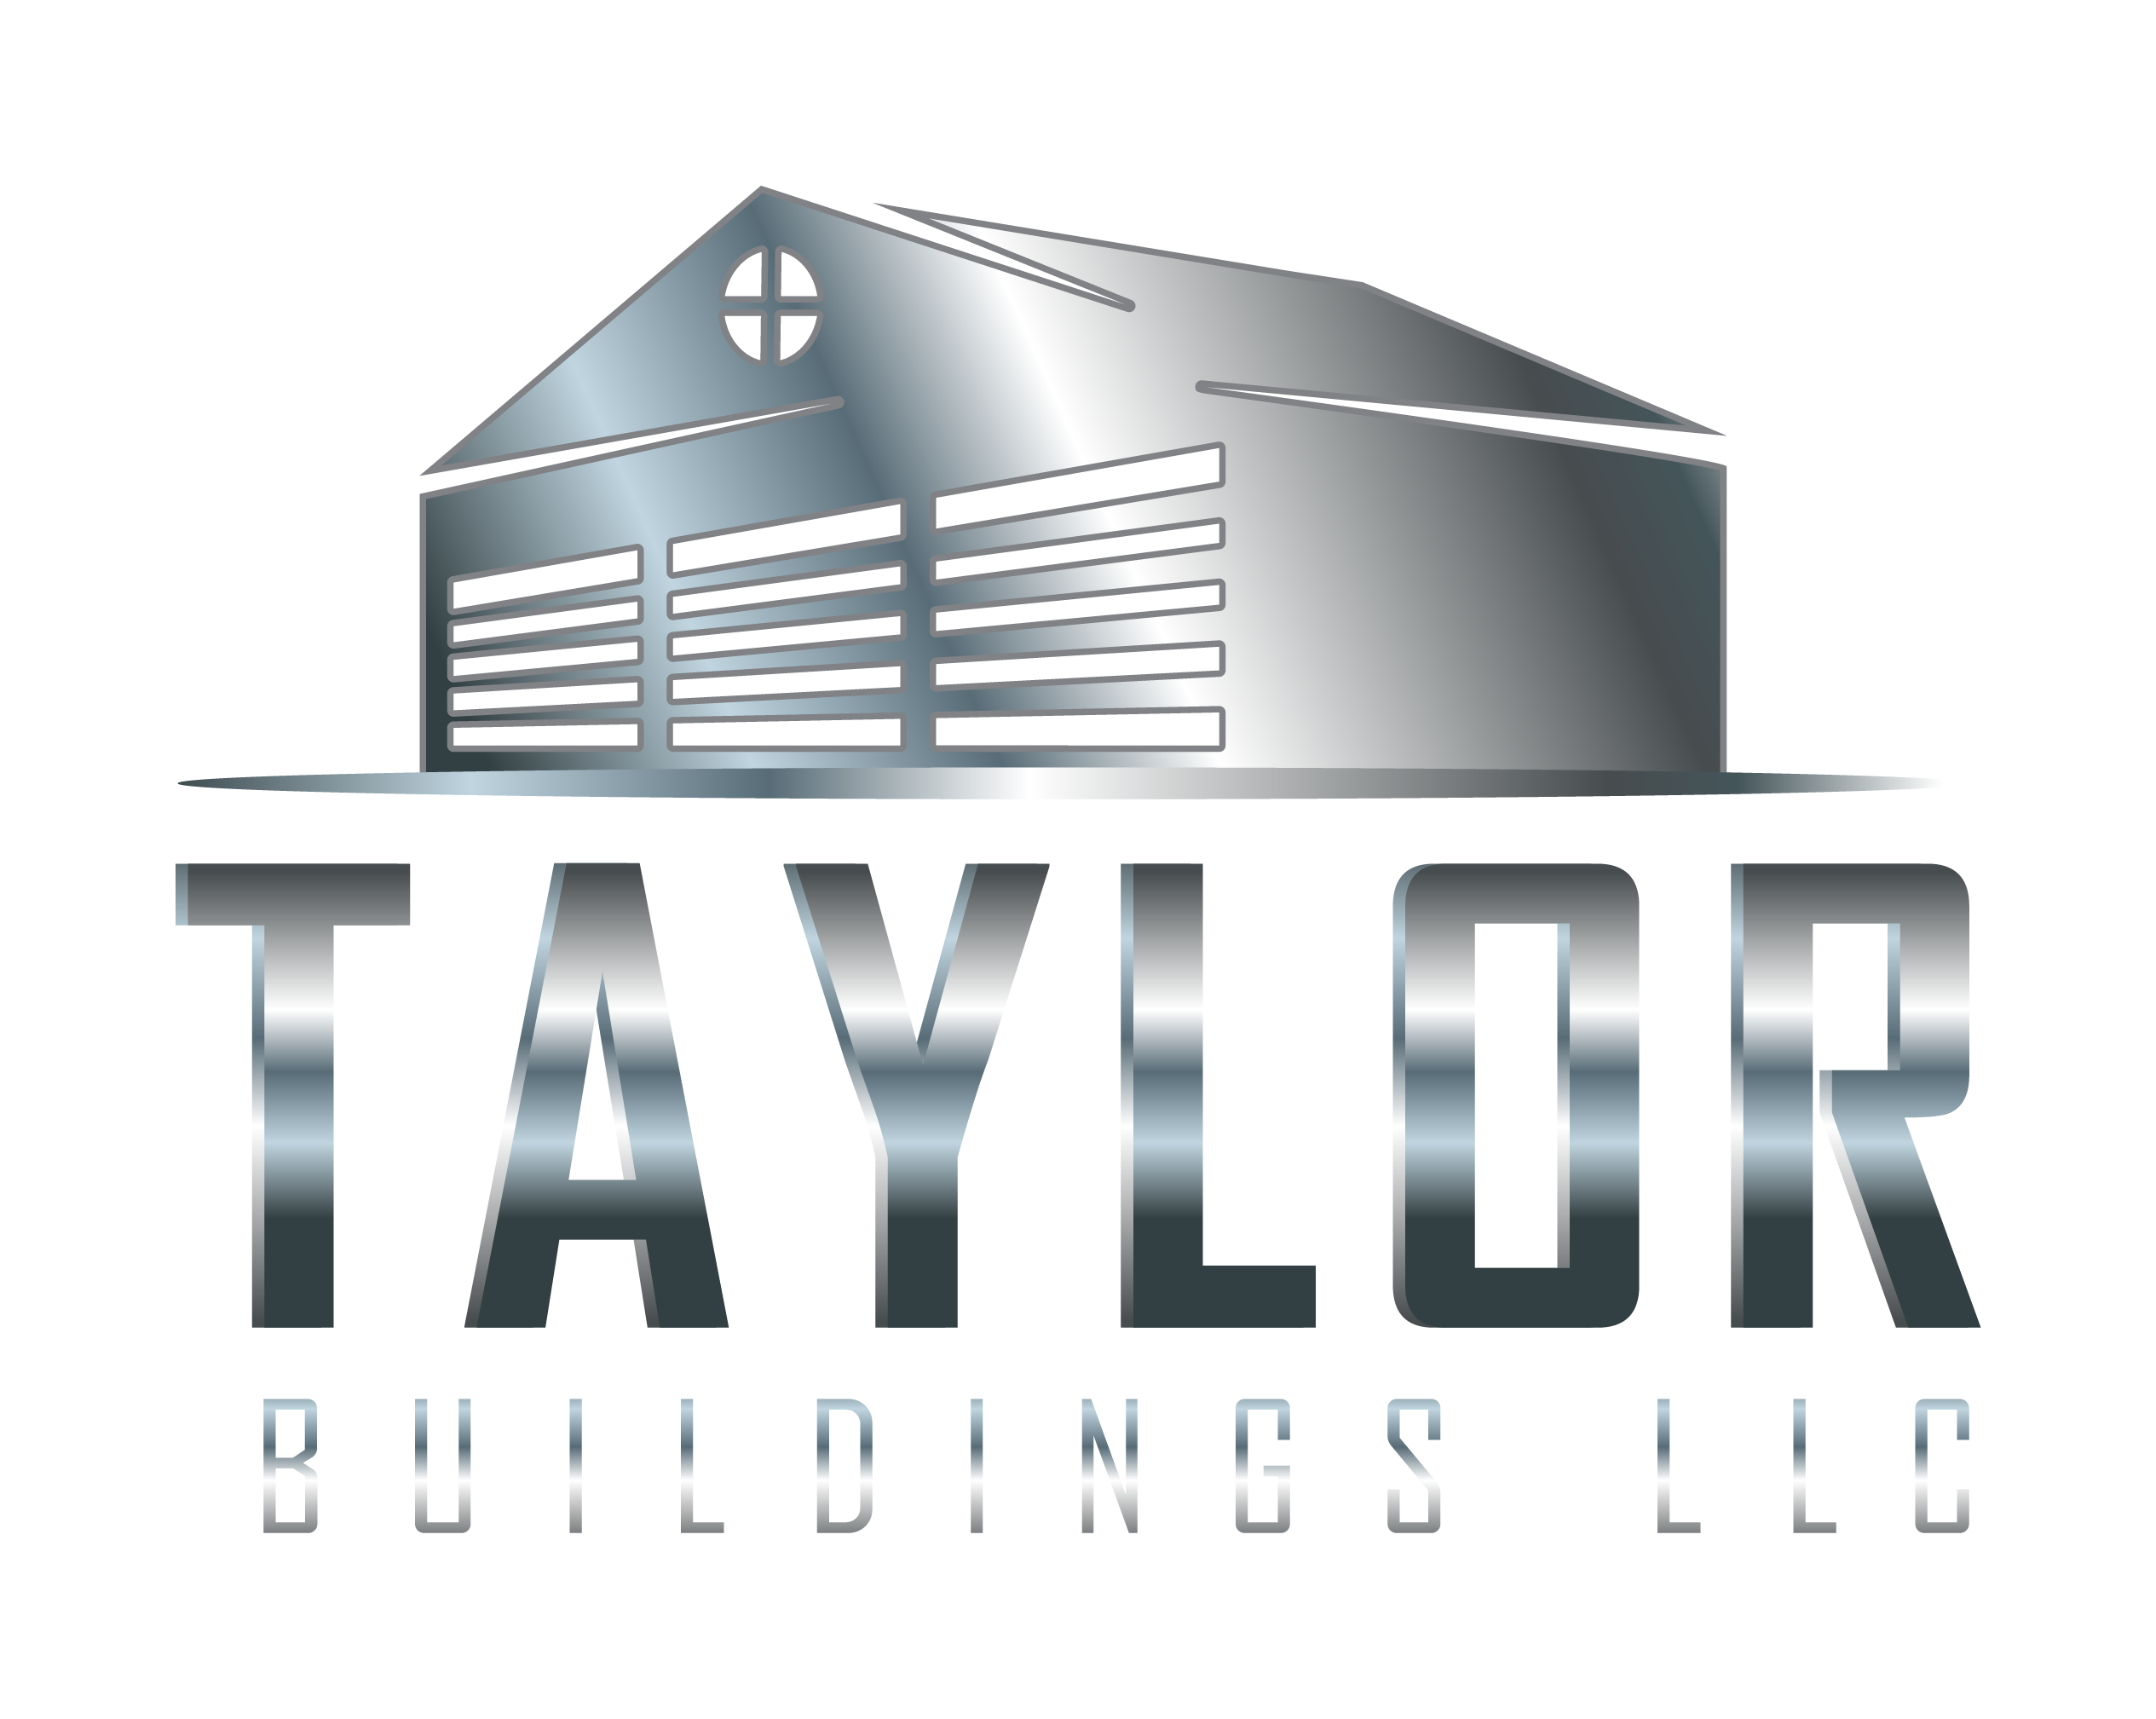 Taylor Building